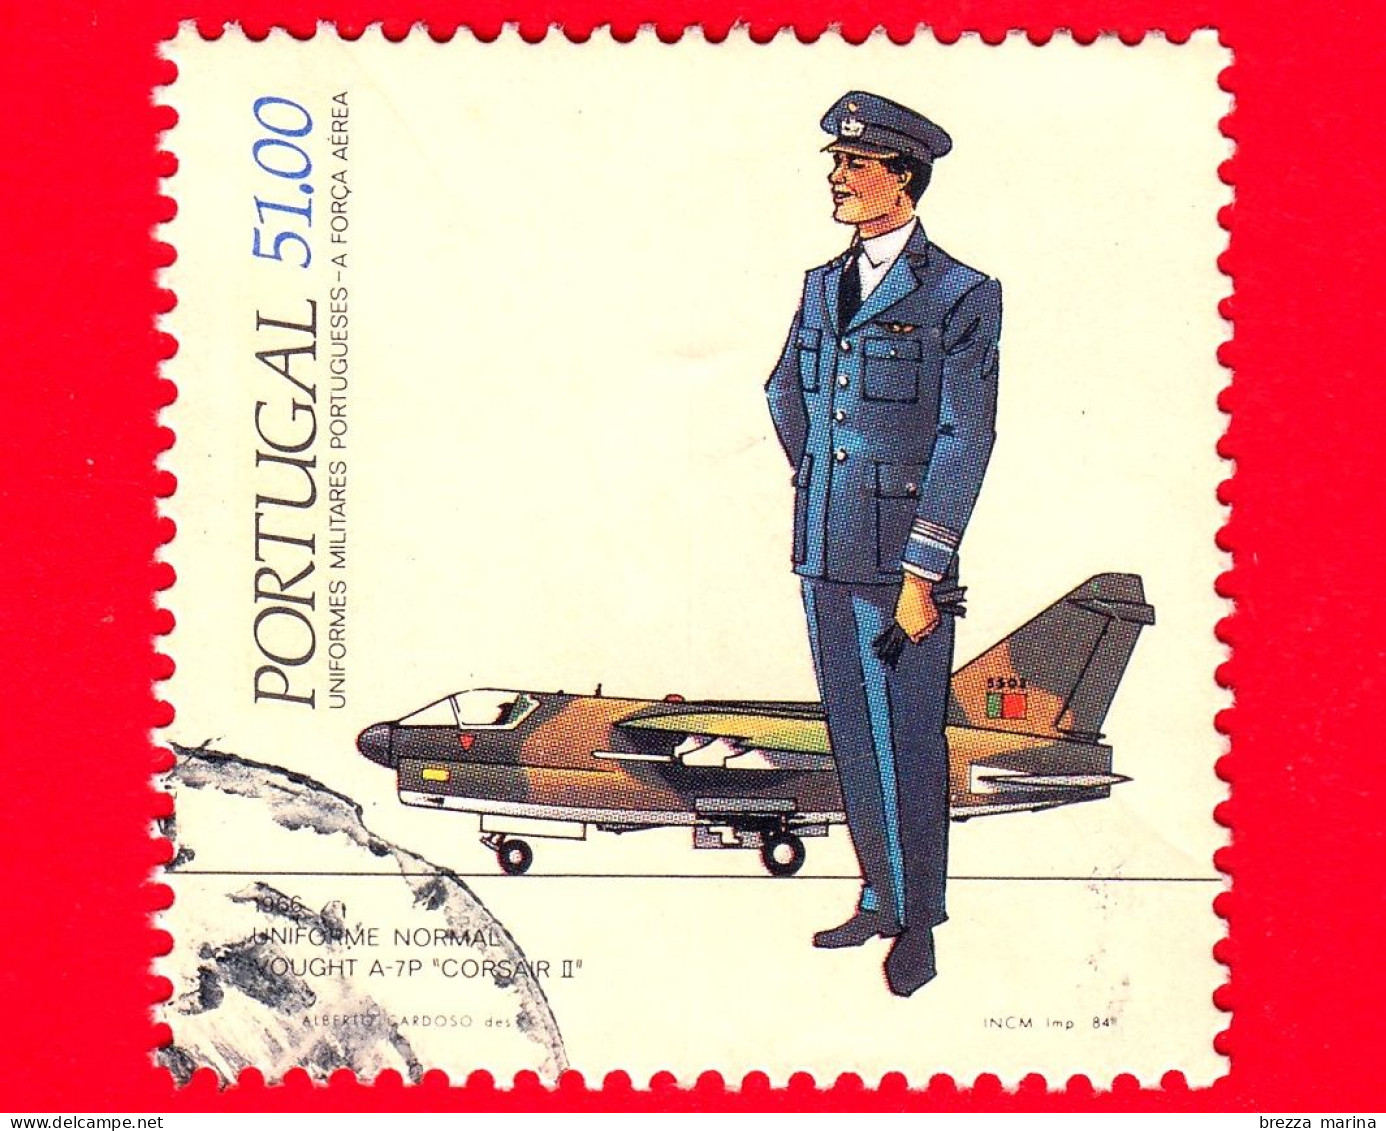 PORTOGALLO - Usato - 1984 - Uniformi Militari Portoghesi - Aeronautica - Corsair II - 51.00 - Gebraucht